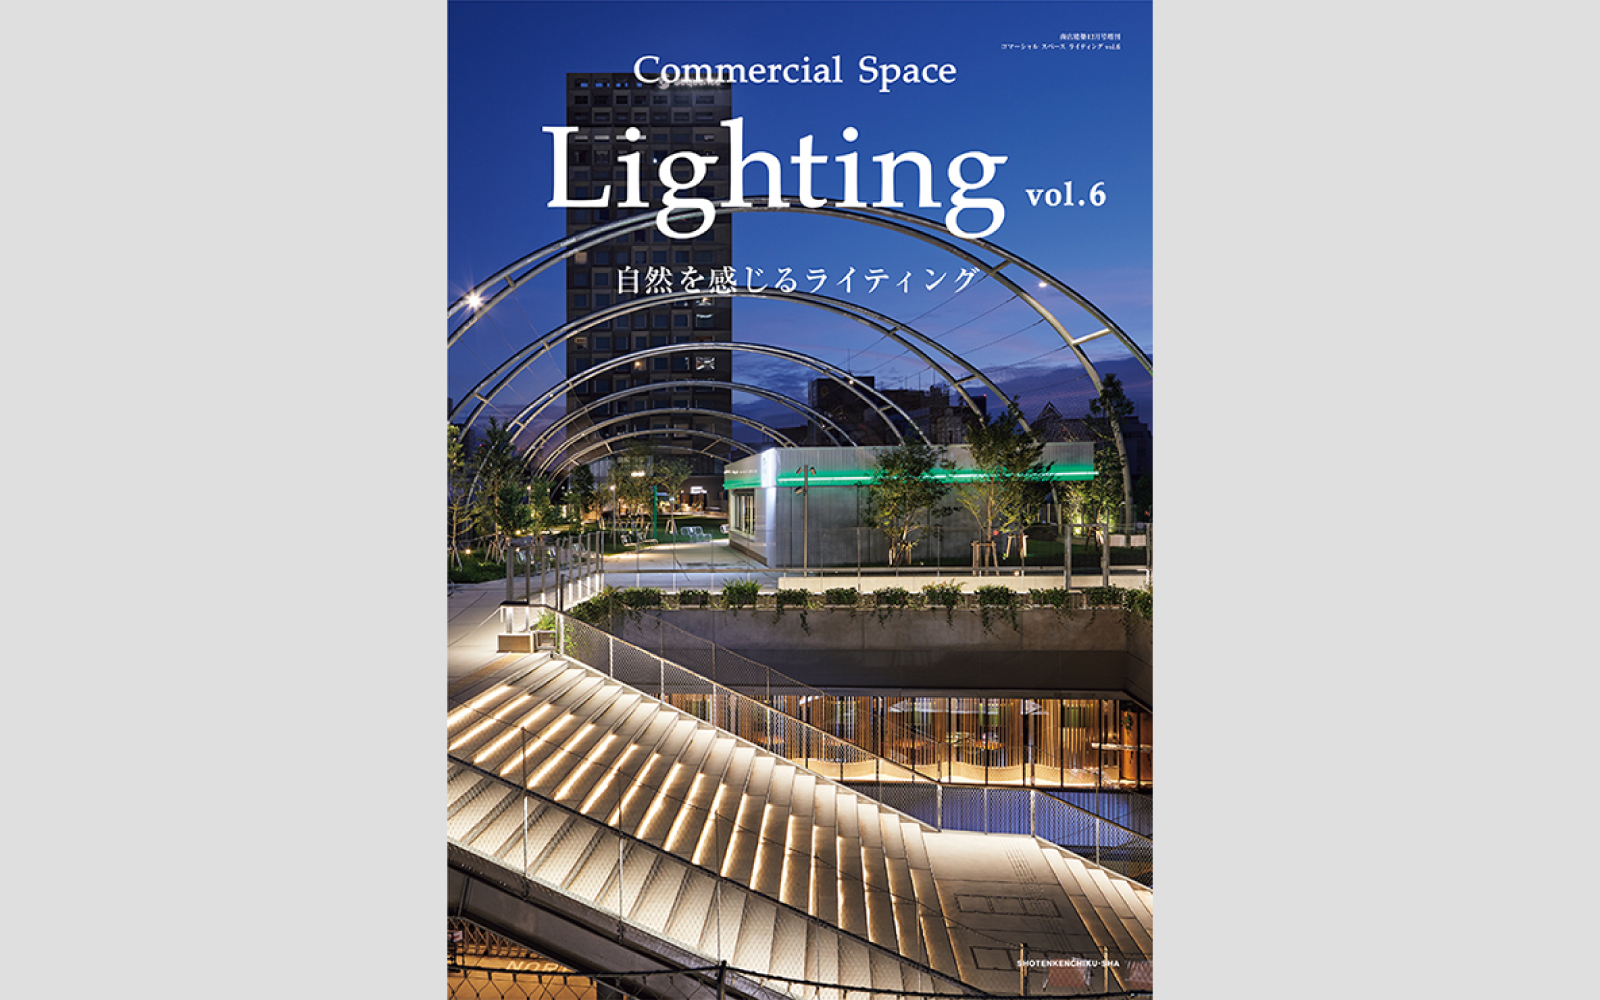 商店建築 2021.12月号増刊 「Commercial Space Lighting vol.6」 掲載